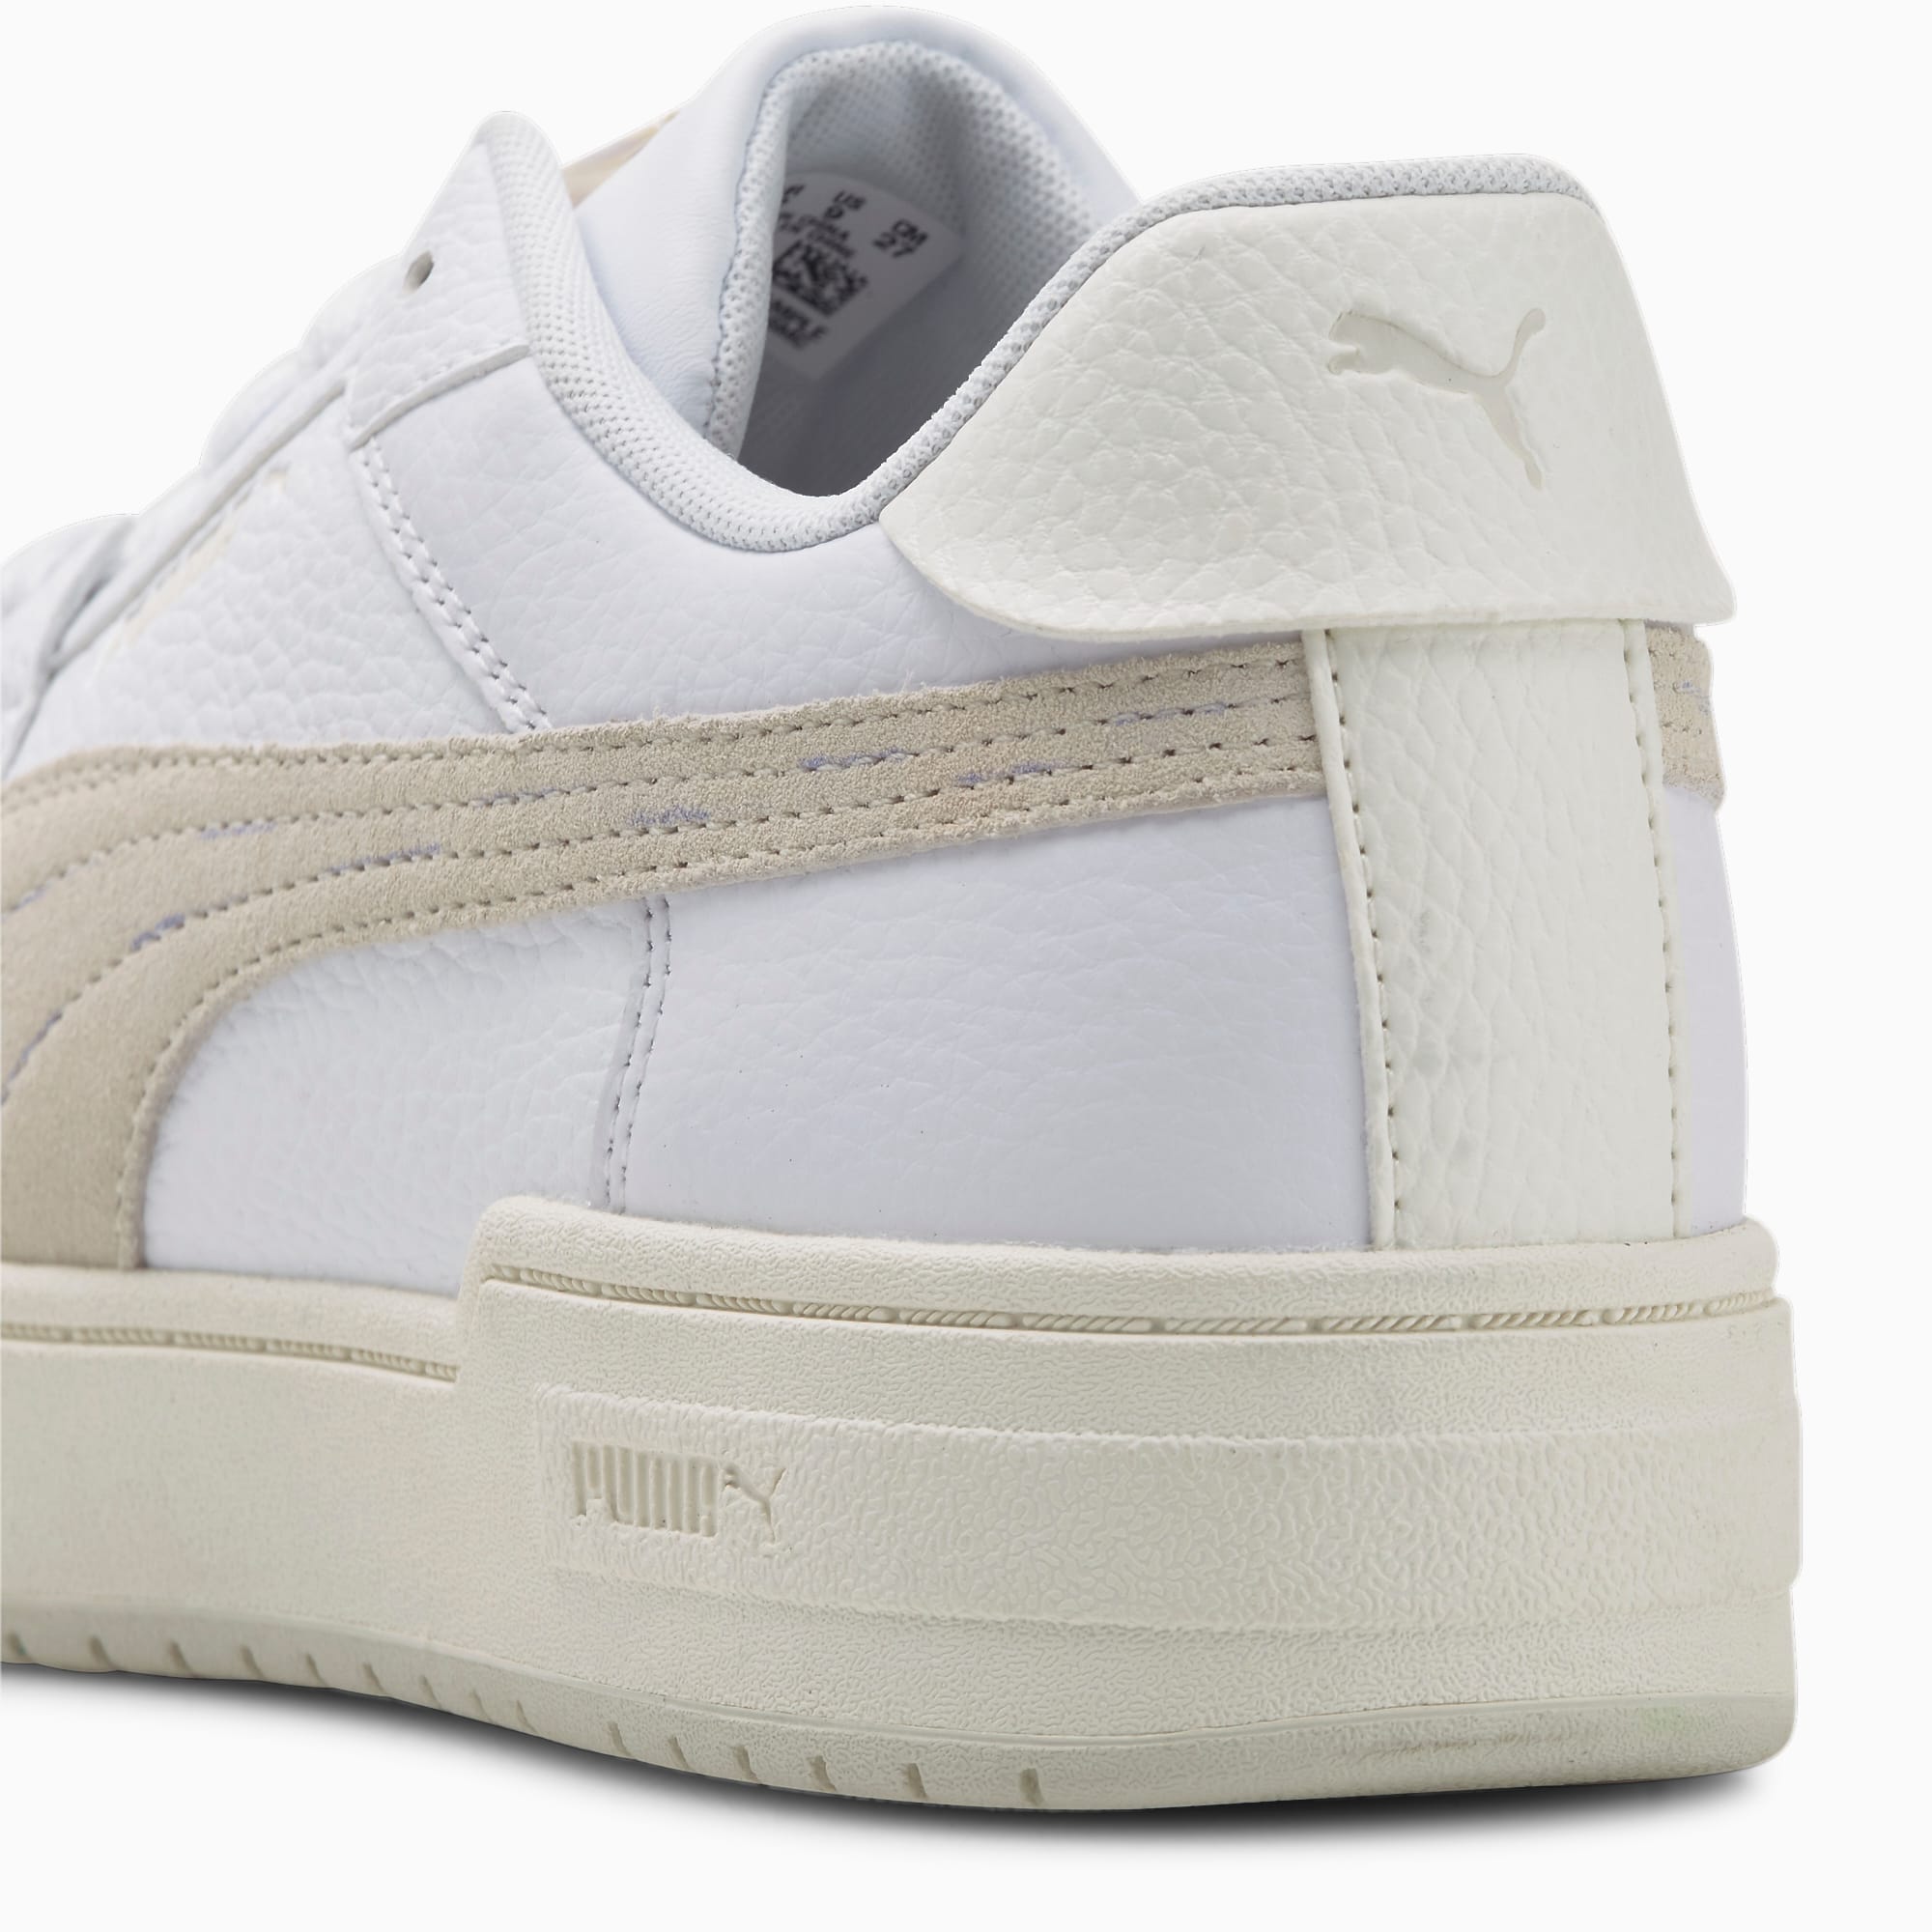 Women's PUMA Ca Pro Ow Sneakers, White/Vapor Grey/Warm White, Size 35,5, Shoes